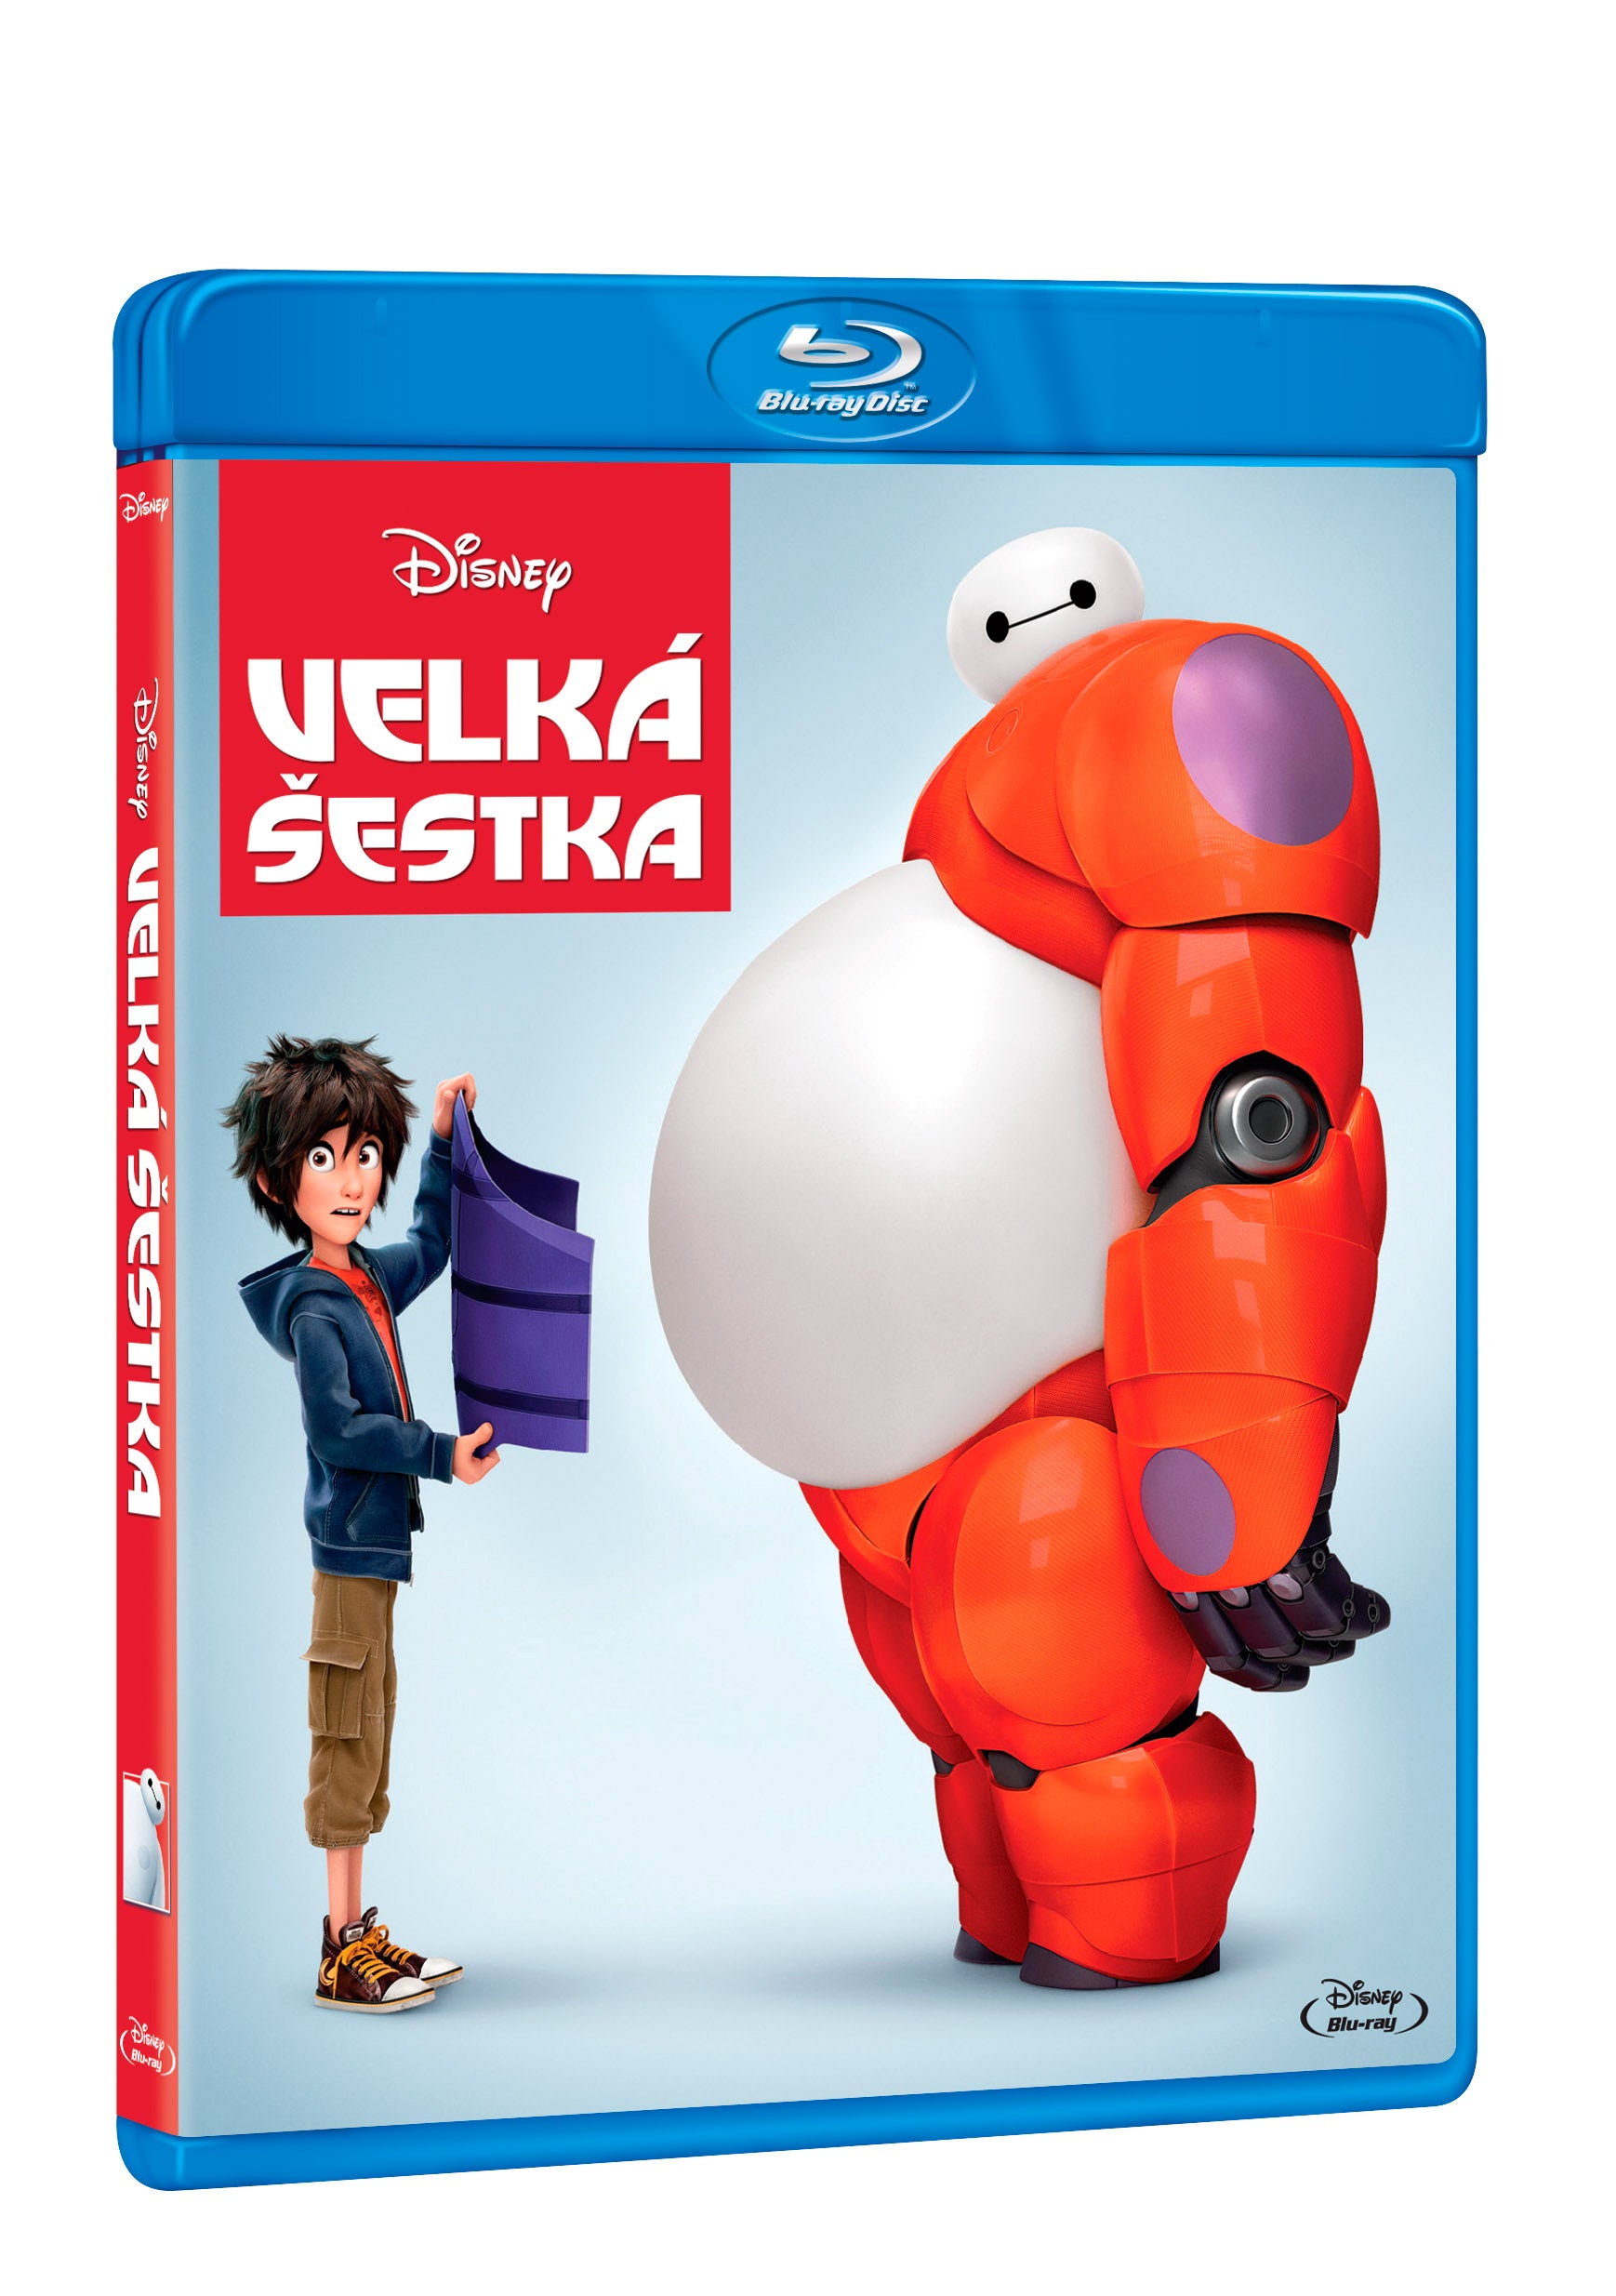 Velka sestka BD / Big Hero 6 - Czech version